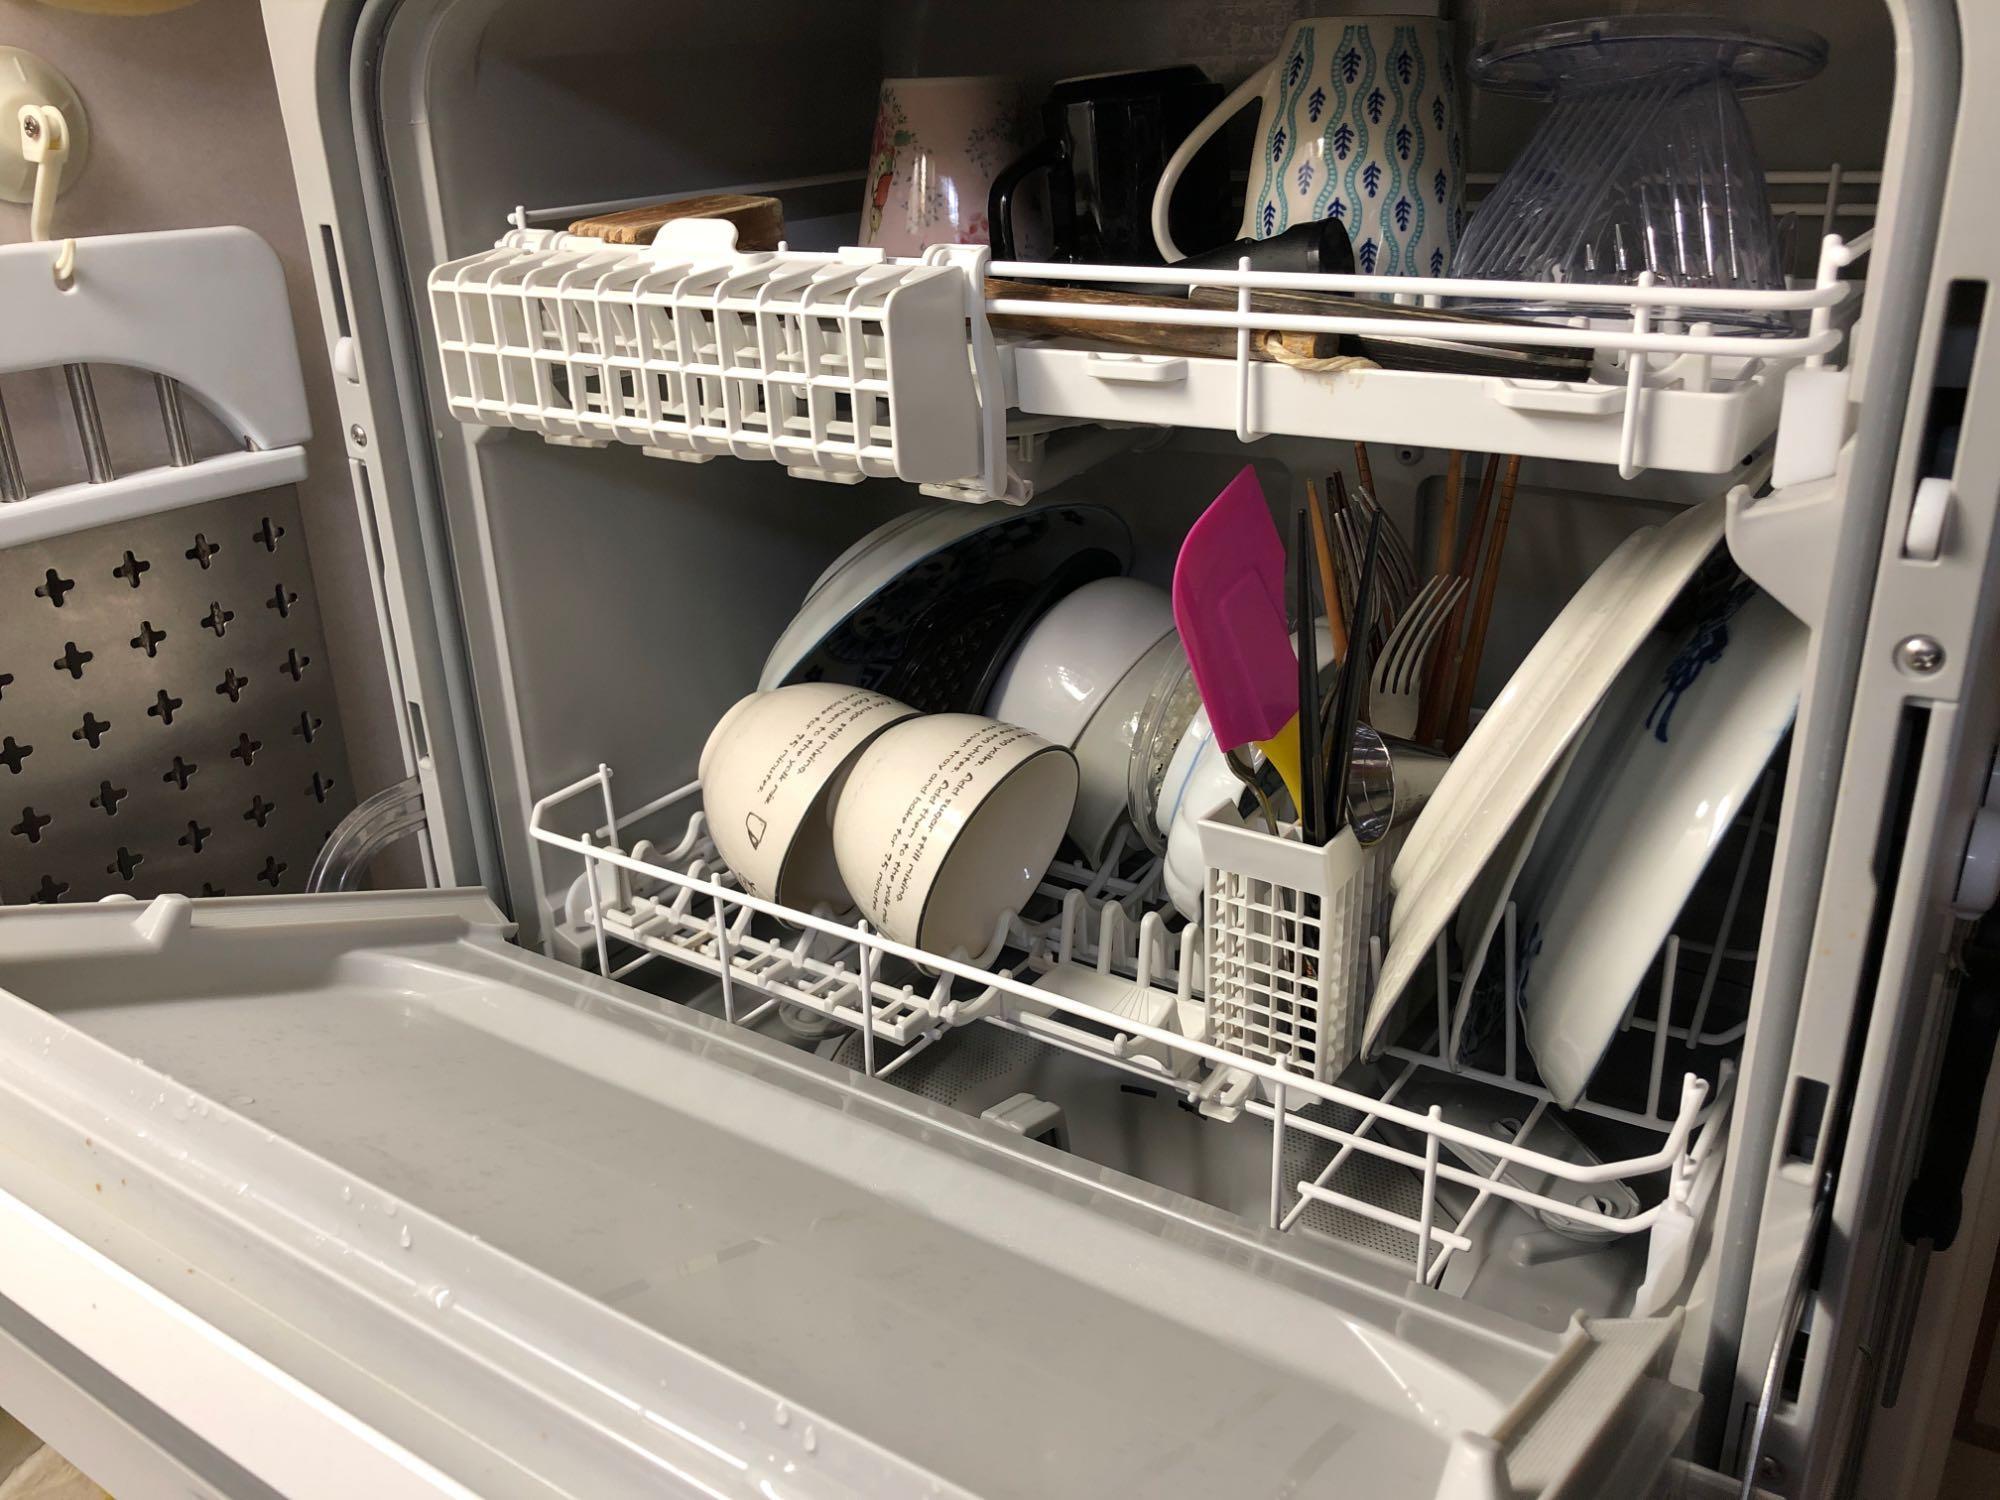 NP-TA3(W) パナソニック(Panasonic) 食器洗い乾燥機(食洗機) ホワイト 